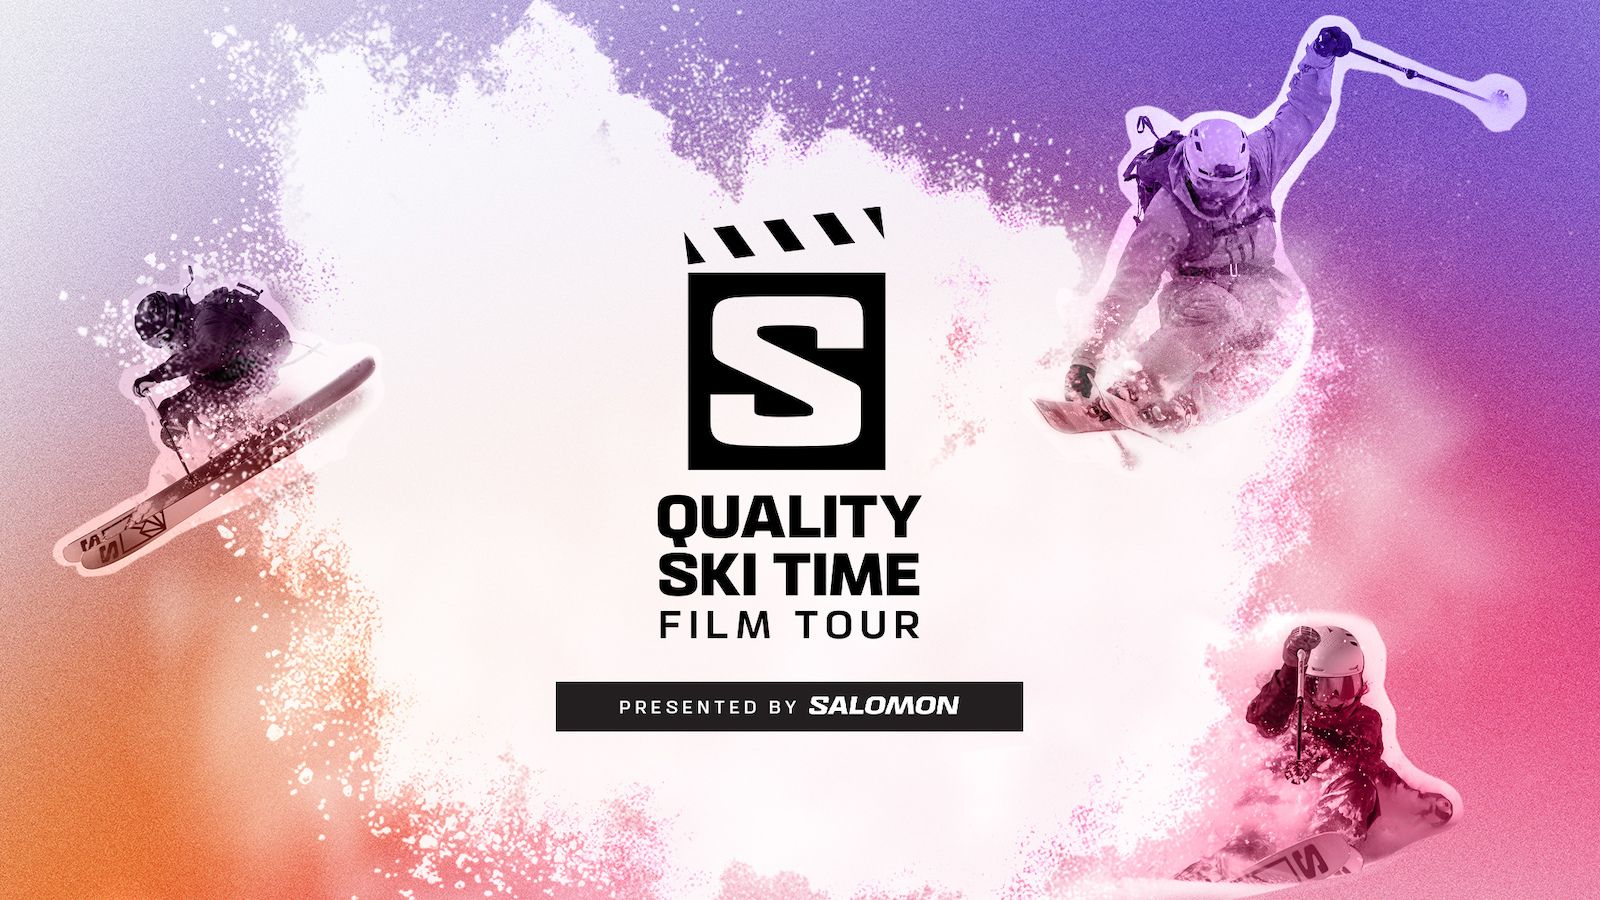 Quality Ski Time Film Tour